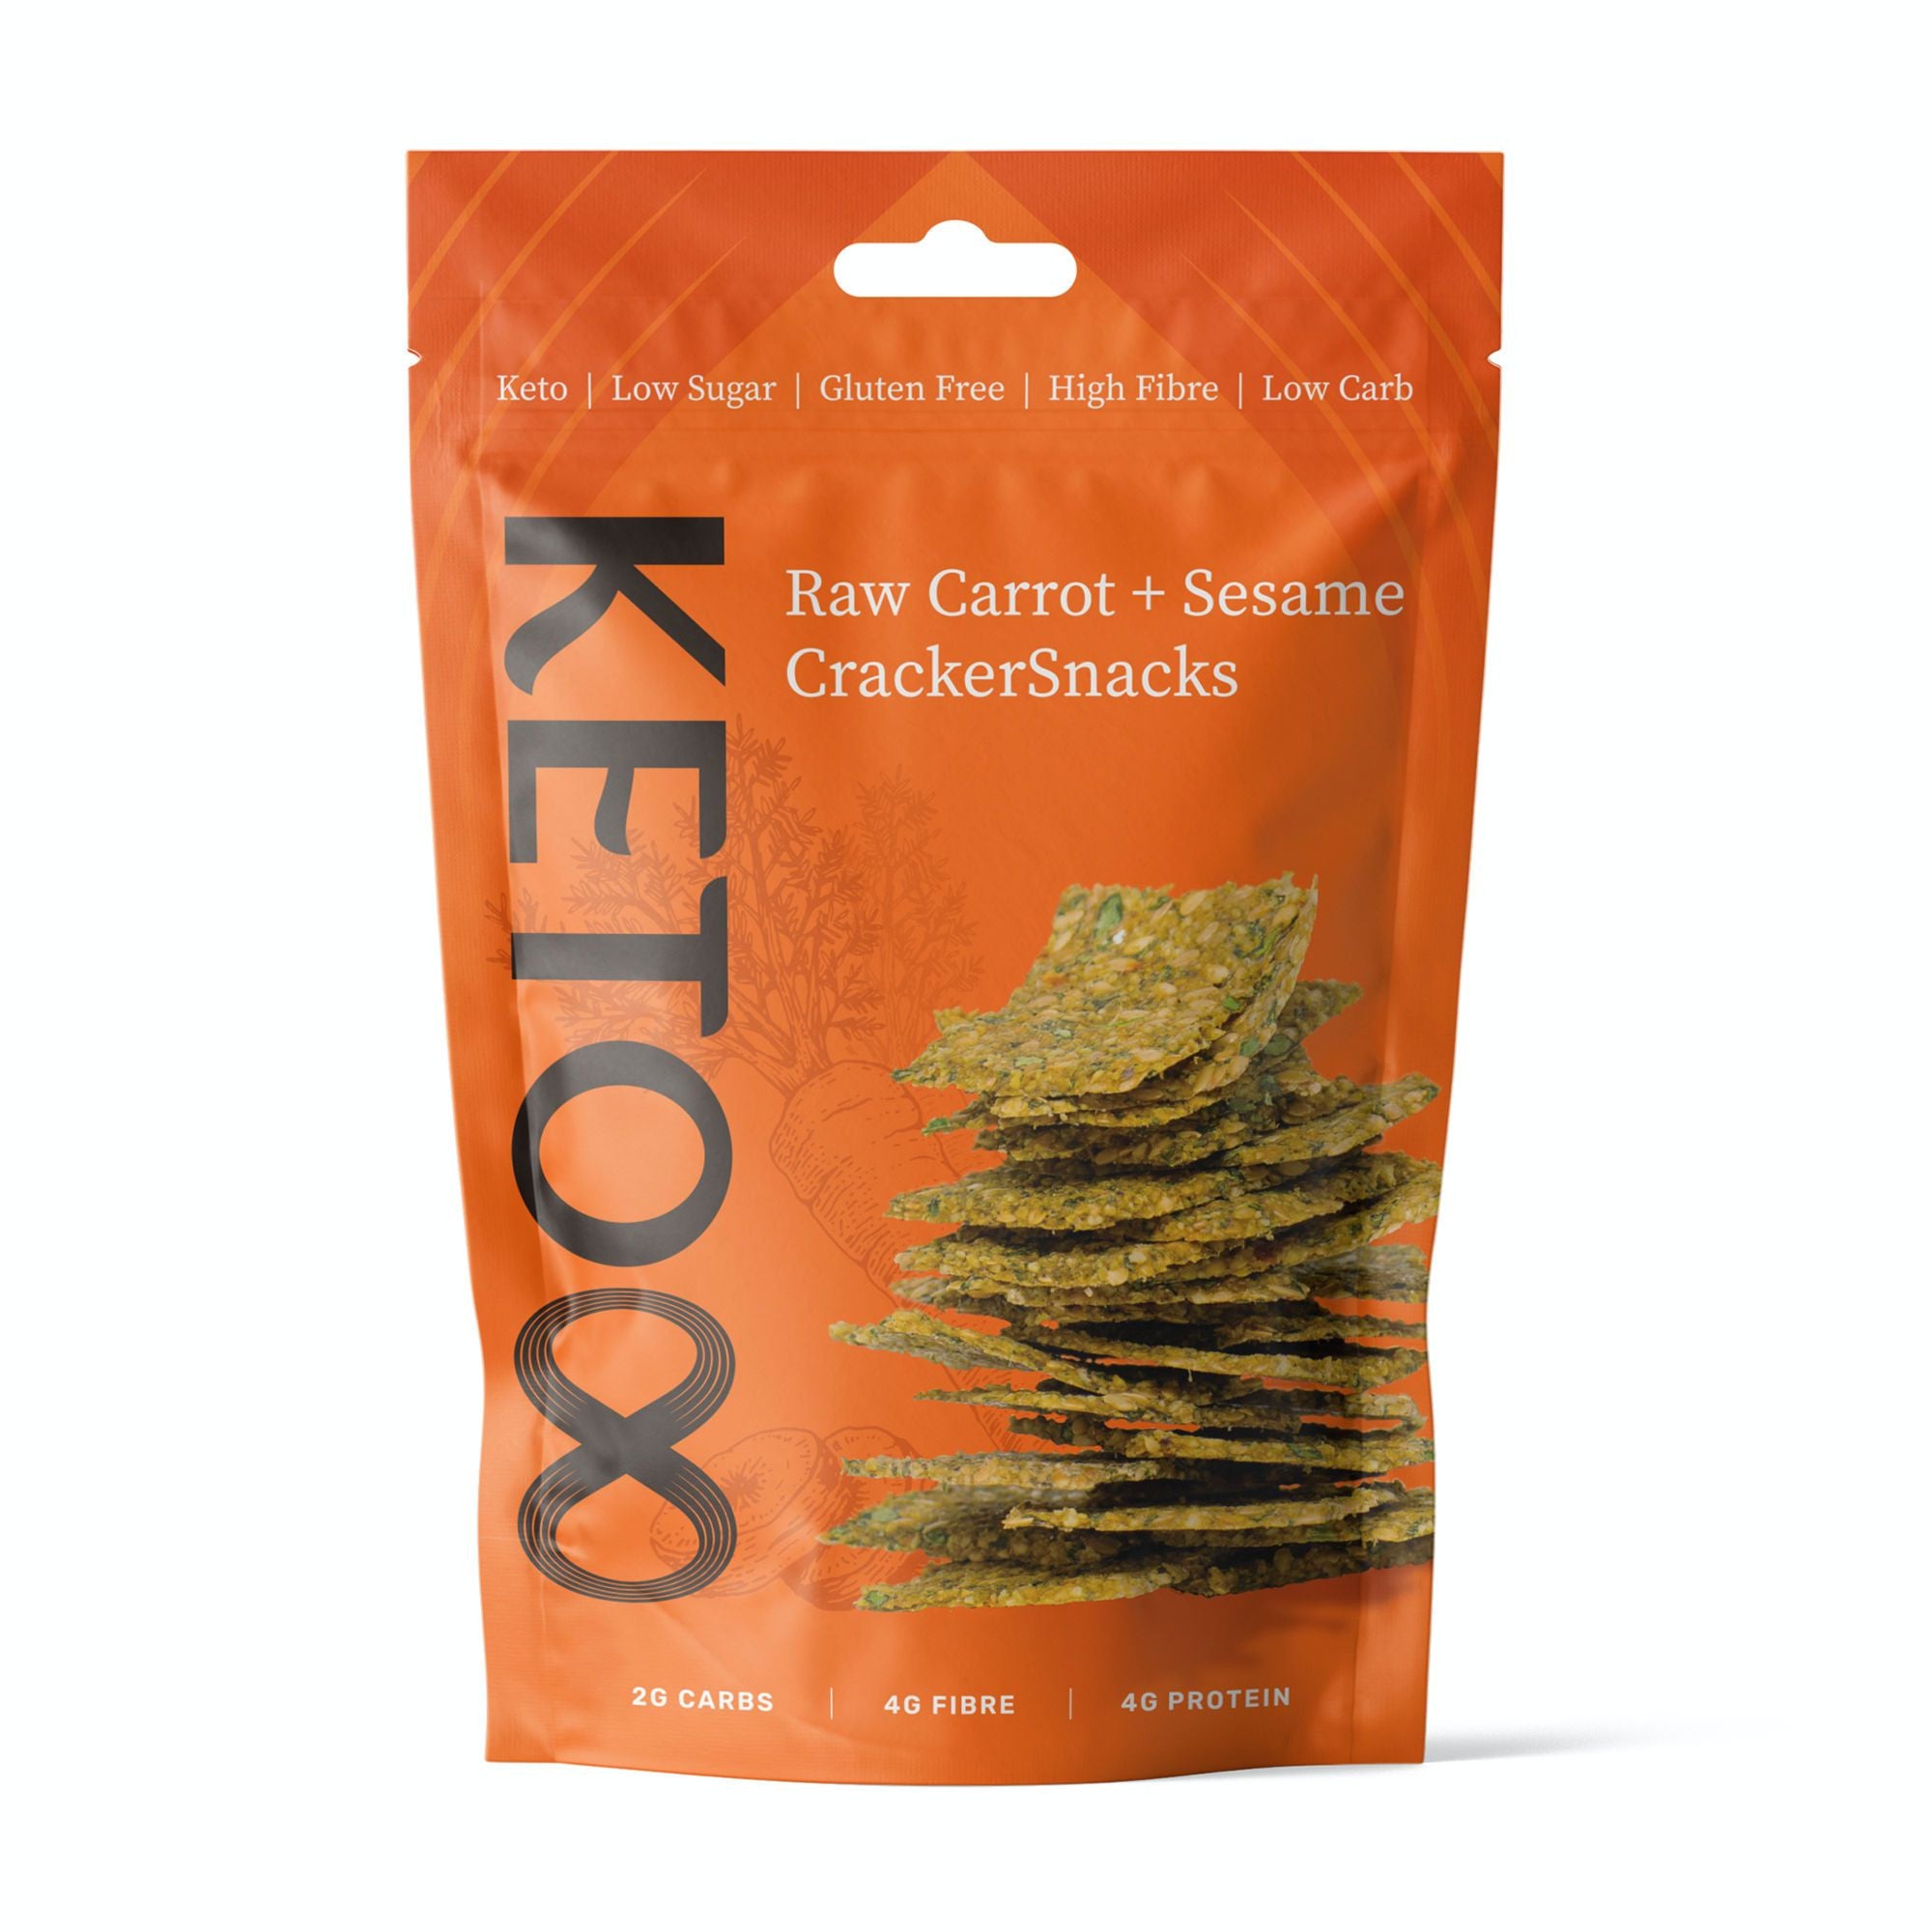 Keto8 Cracker Snacks